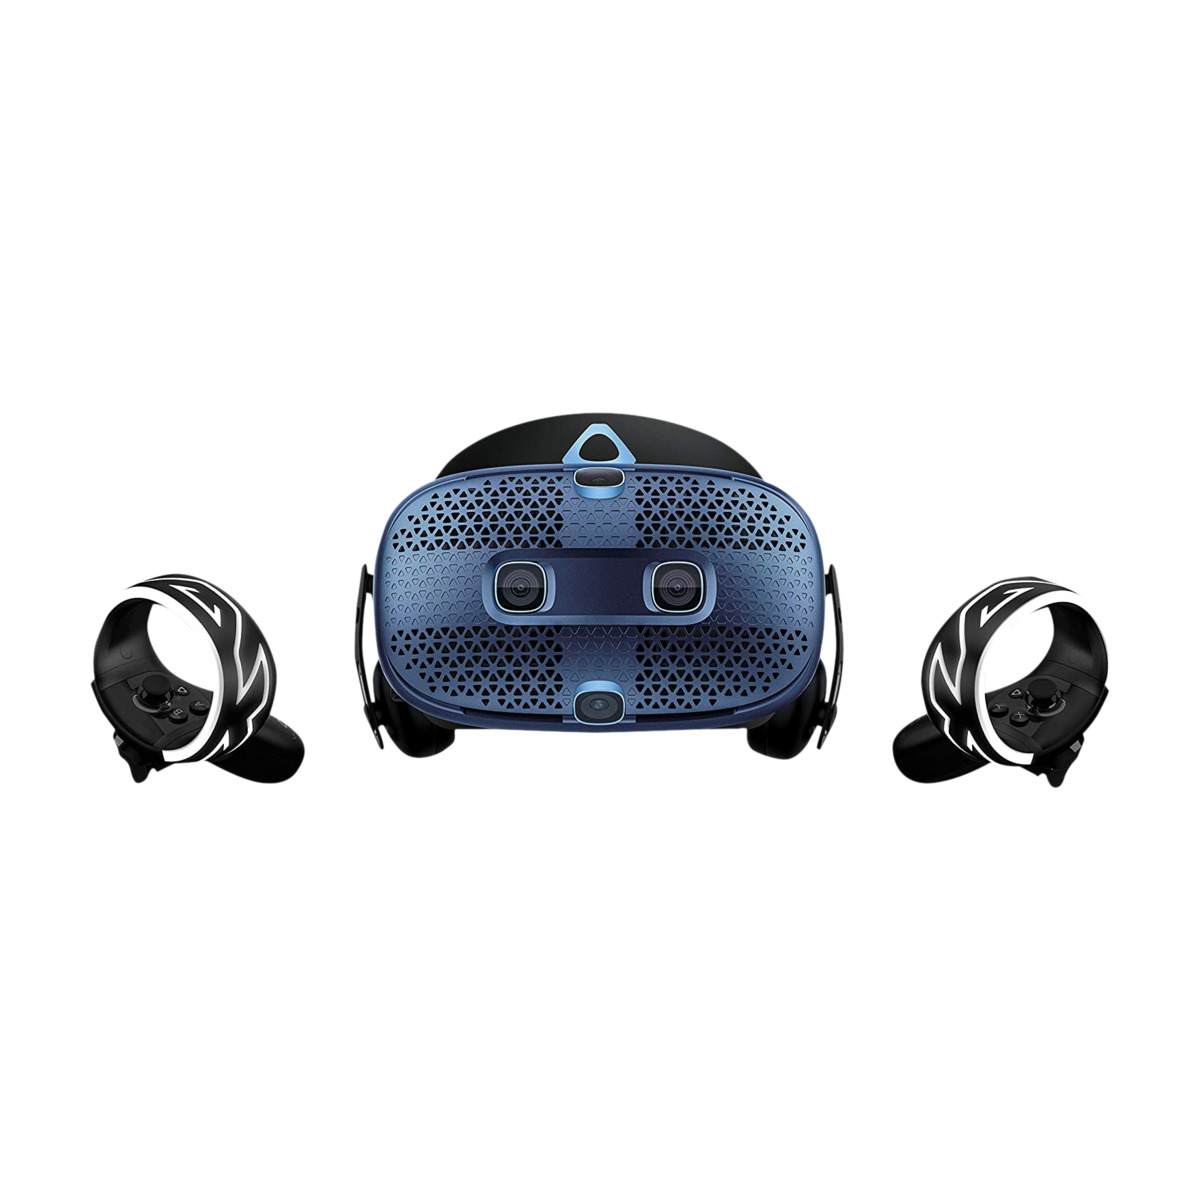 HTC Vive Cosmos VR headset